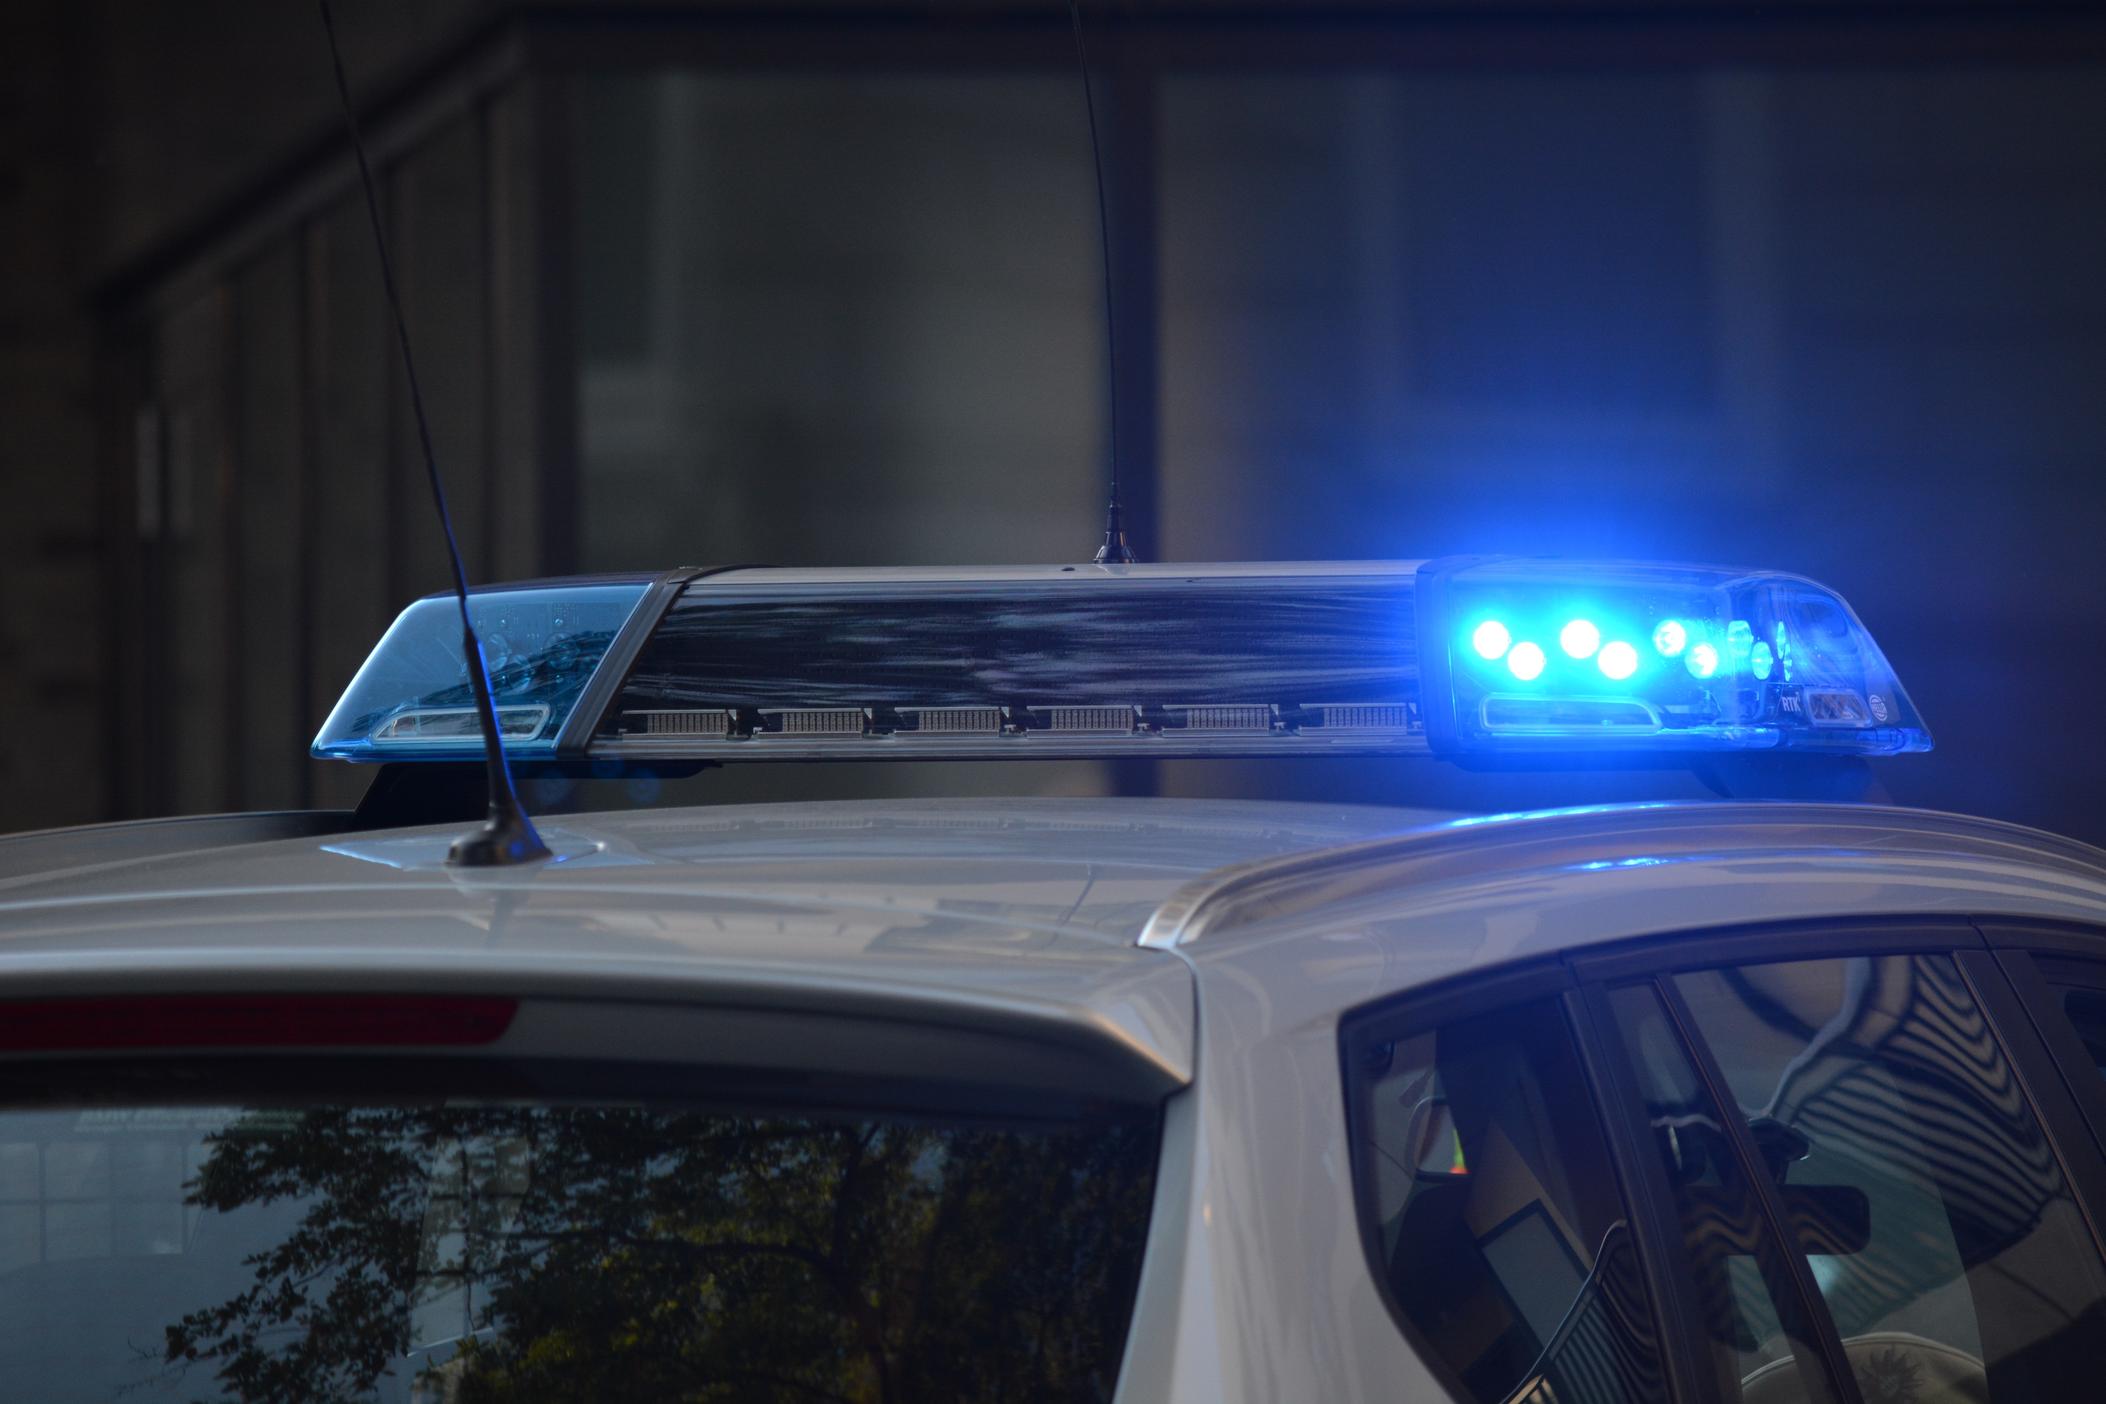 Flashing lights on a police vehicle